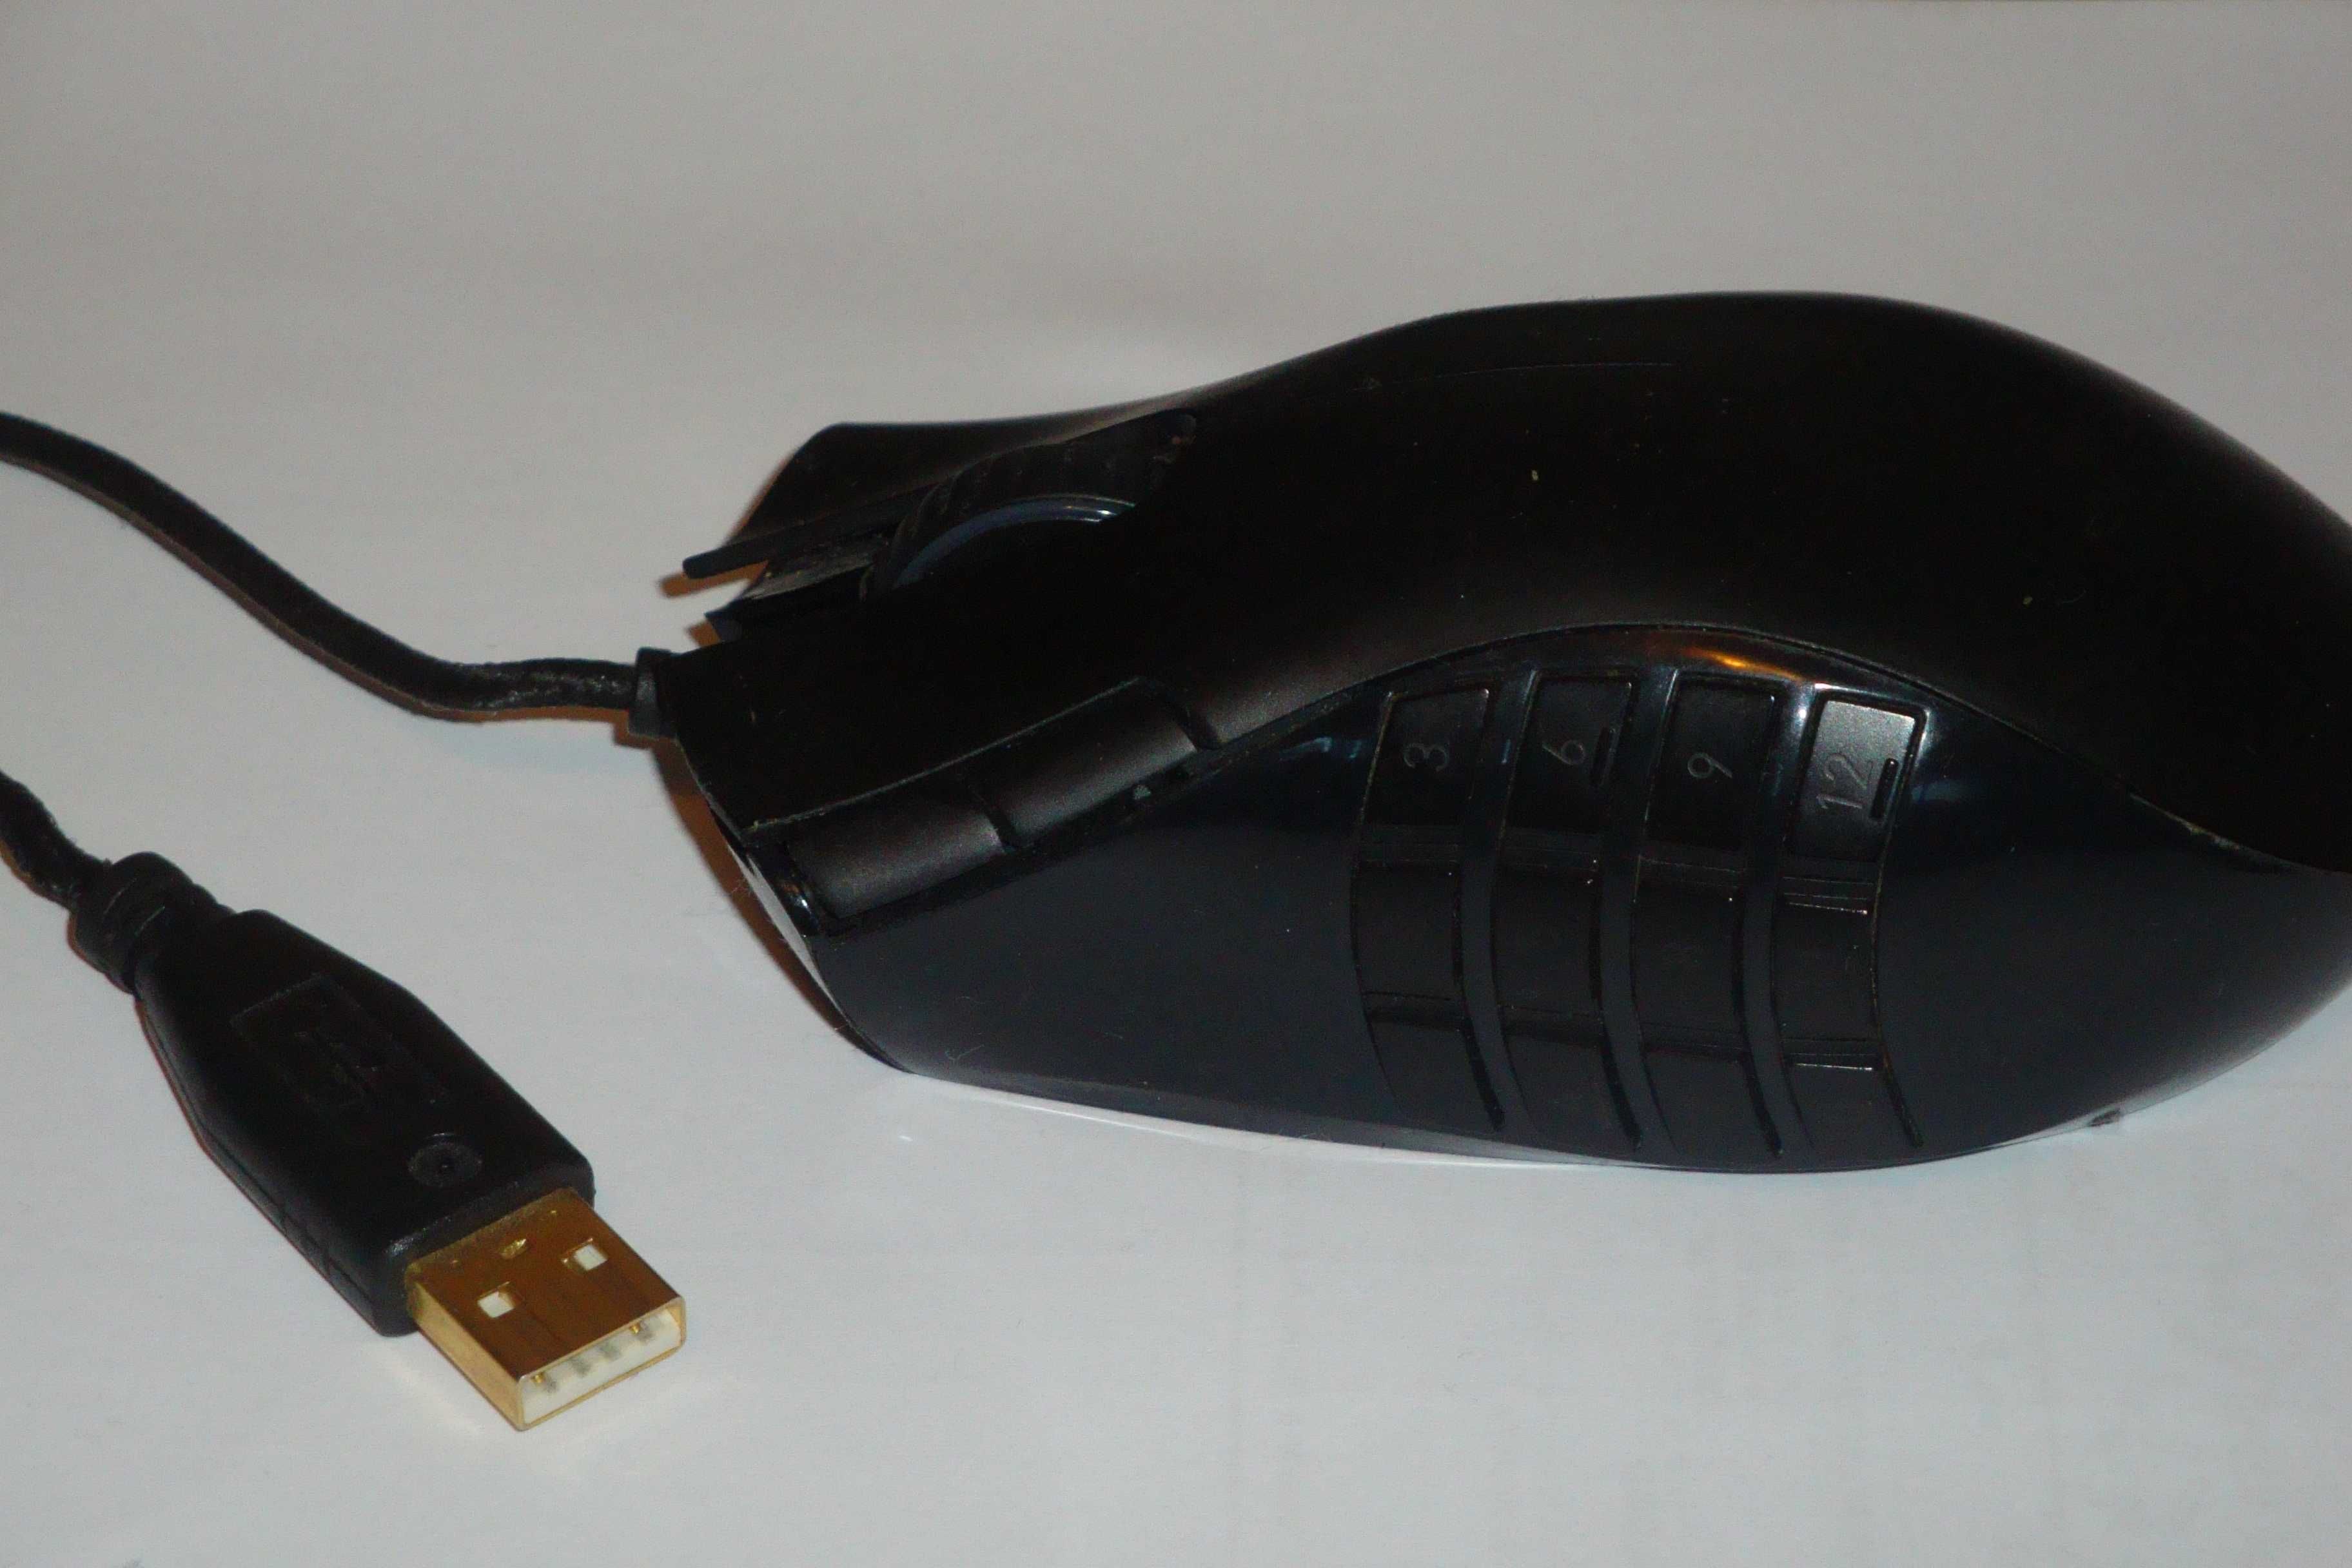 Mouse razer naga mmog gaming mouse usb transport gratuit